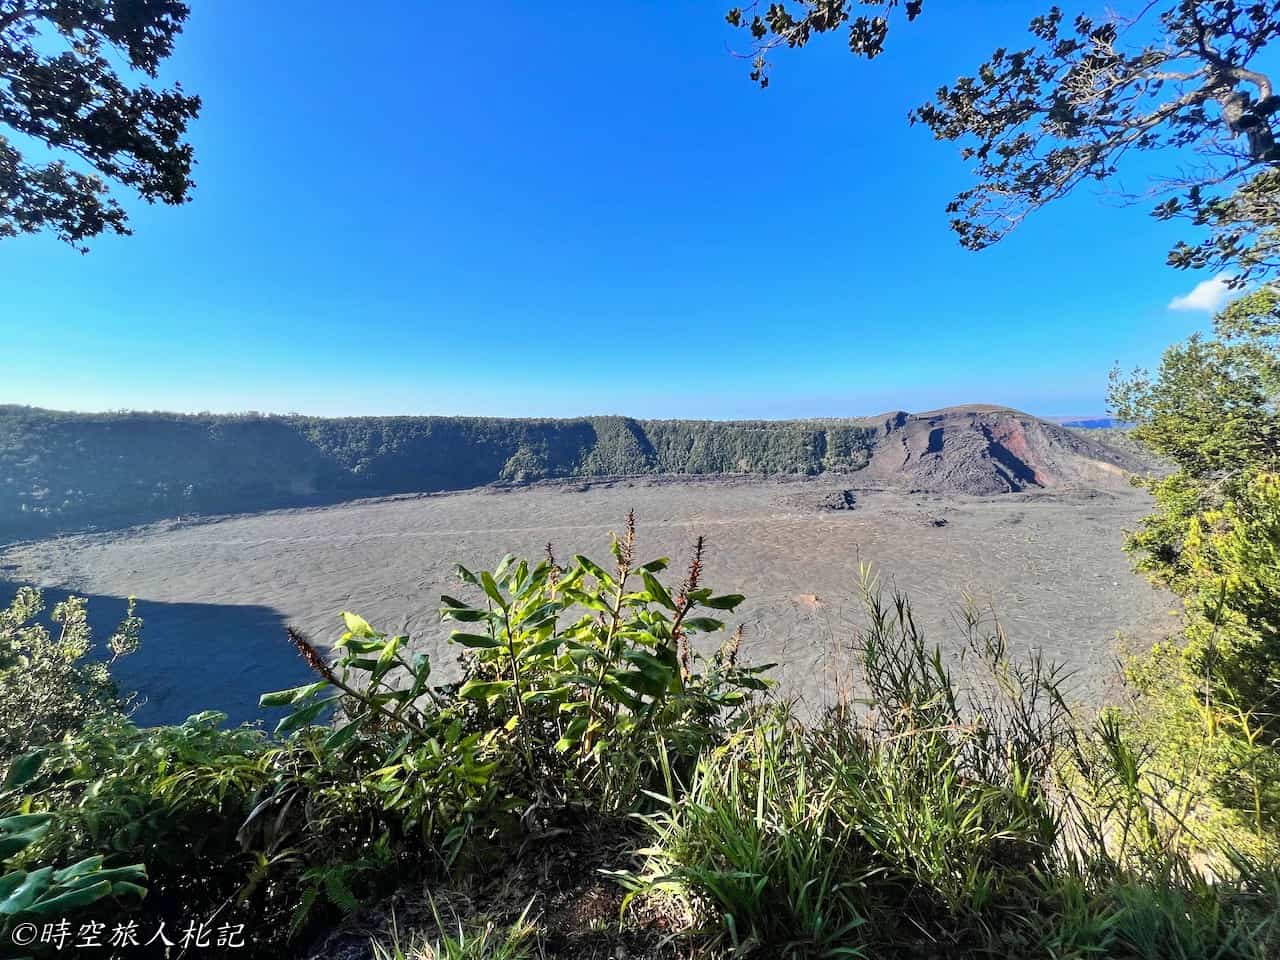 Hawaii volcanos national park,夏威夷火山國家公園 24